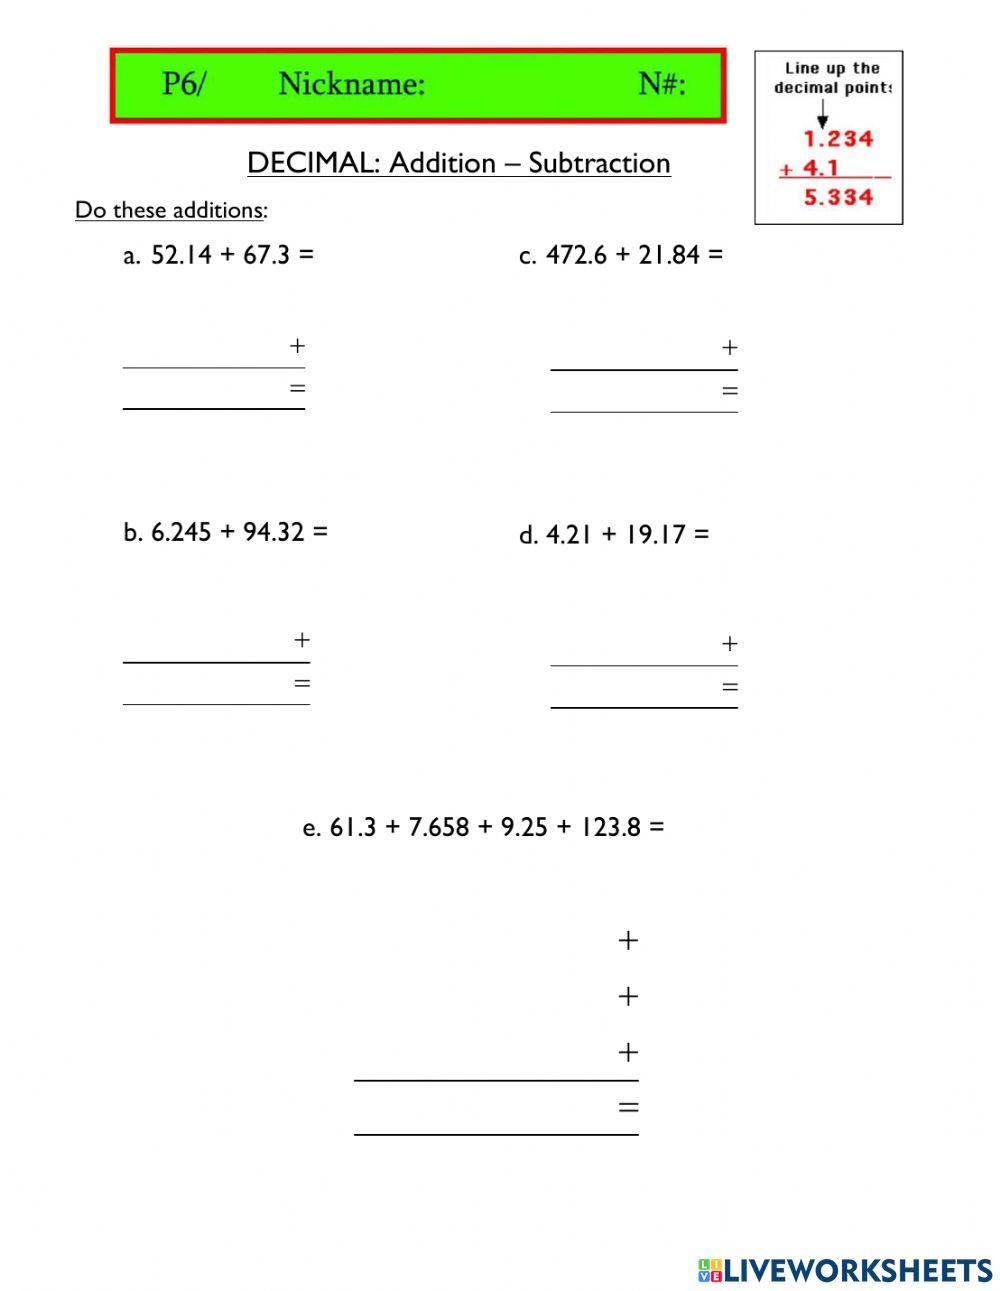 Decimal : Addition - Subtraction